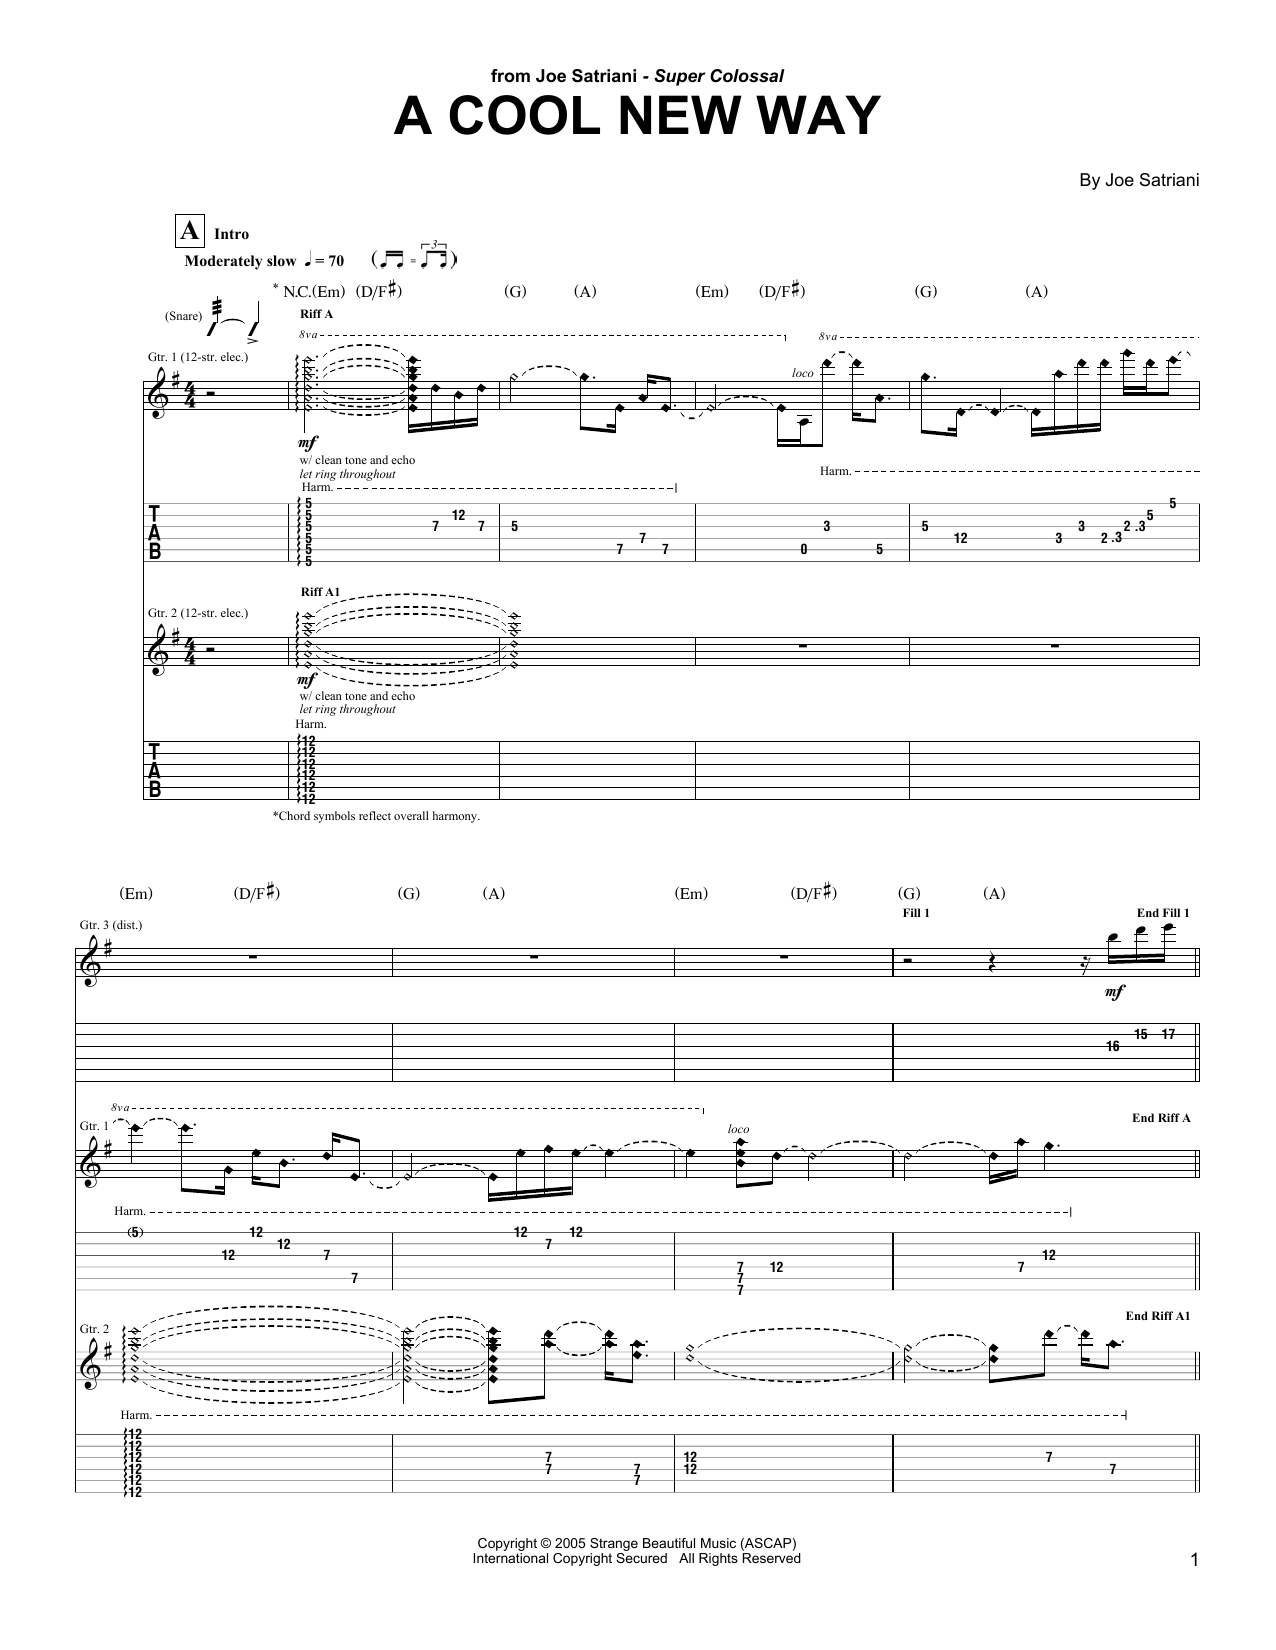 Joe Satriani A Cool New Way Sheet Music Notes & Chords for Guitar Tab - Download or Print PDF